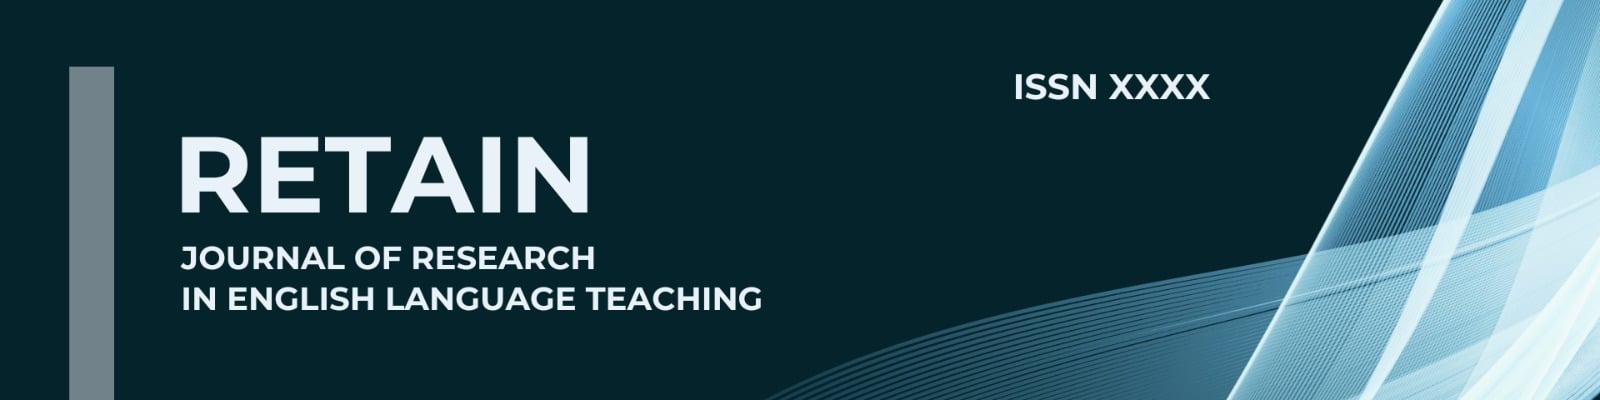 RETAIN : Journal of Research in English Language Teaching